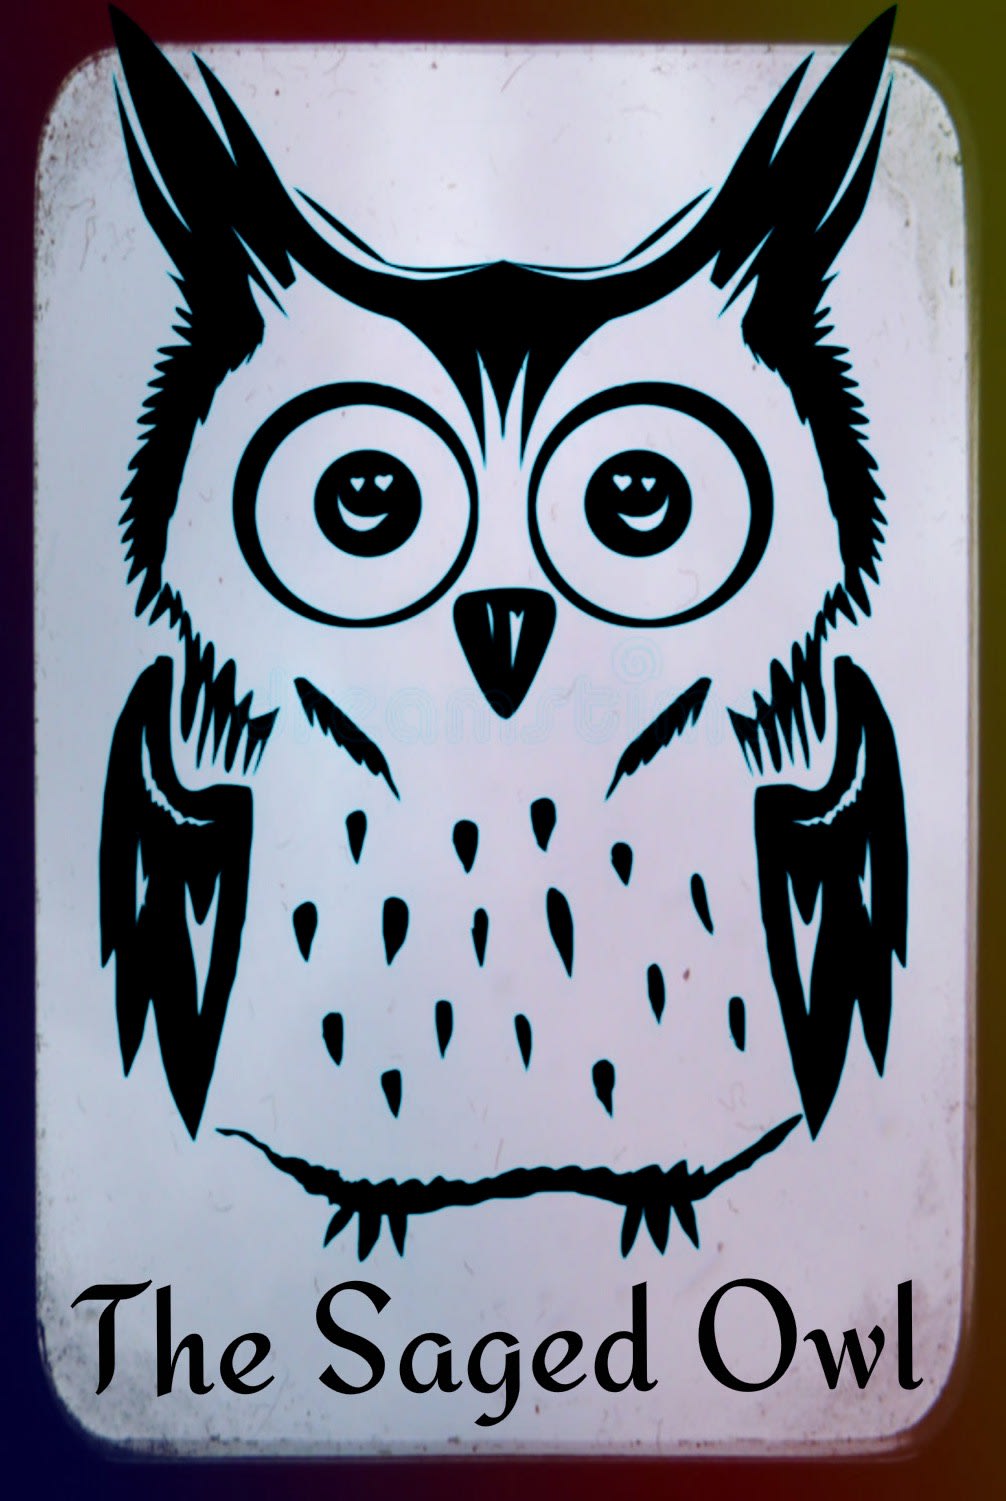 The Saged Owl